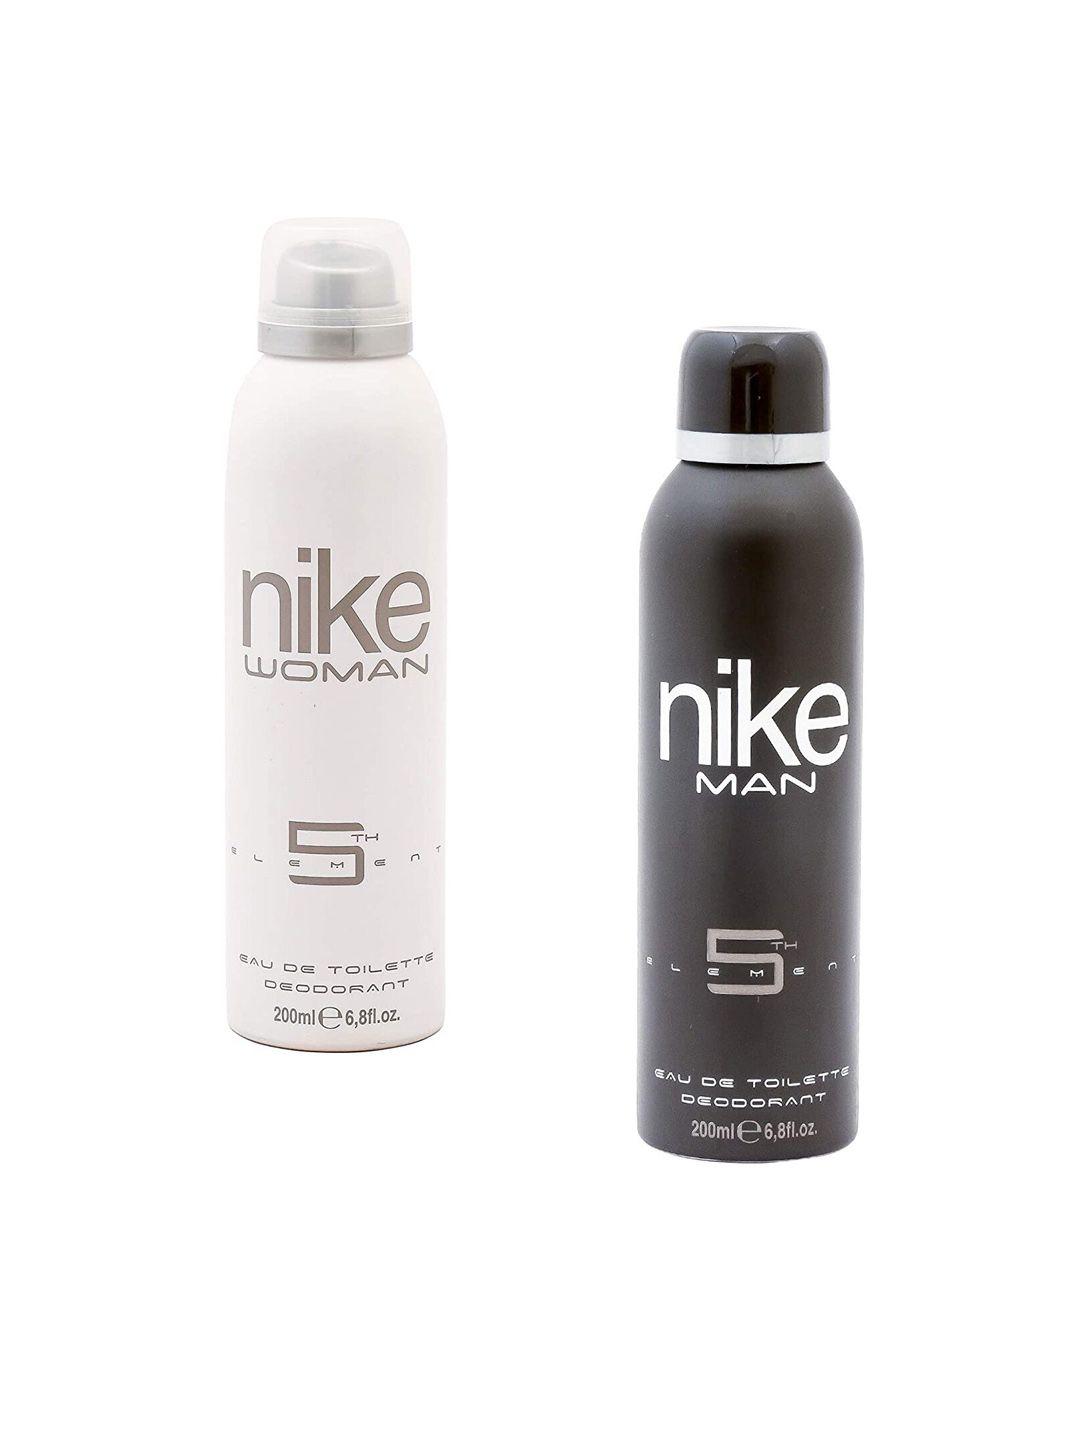 nike-unisex-set-of-2-eau-de-toilette-deodorants-200ml-each---5th-element